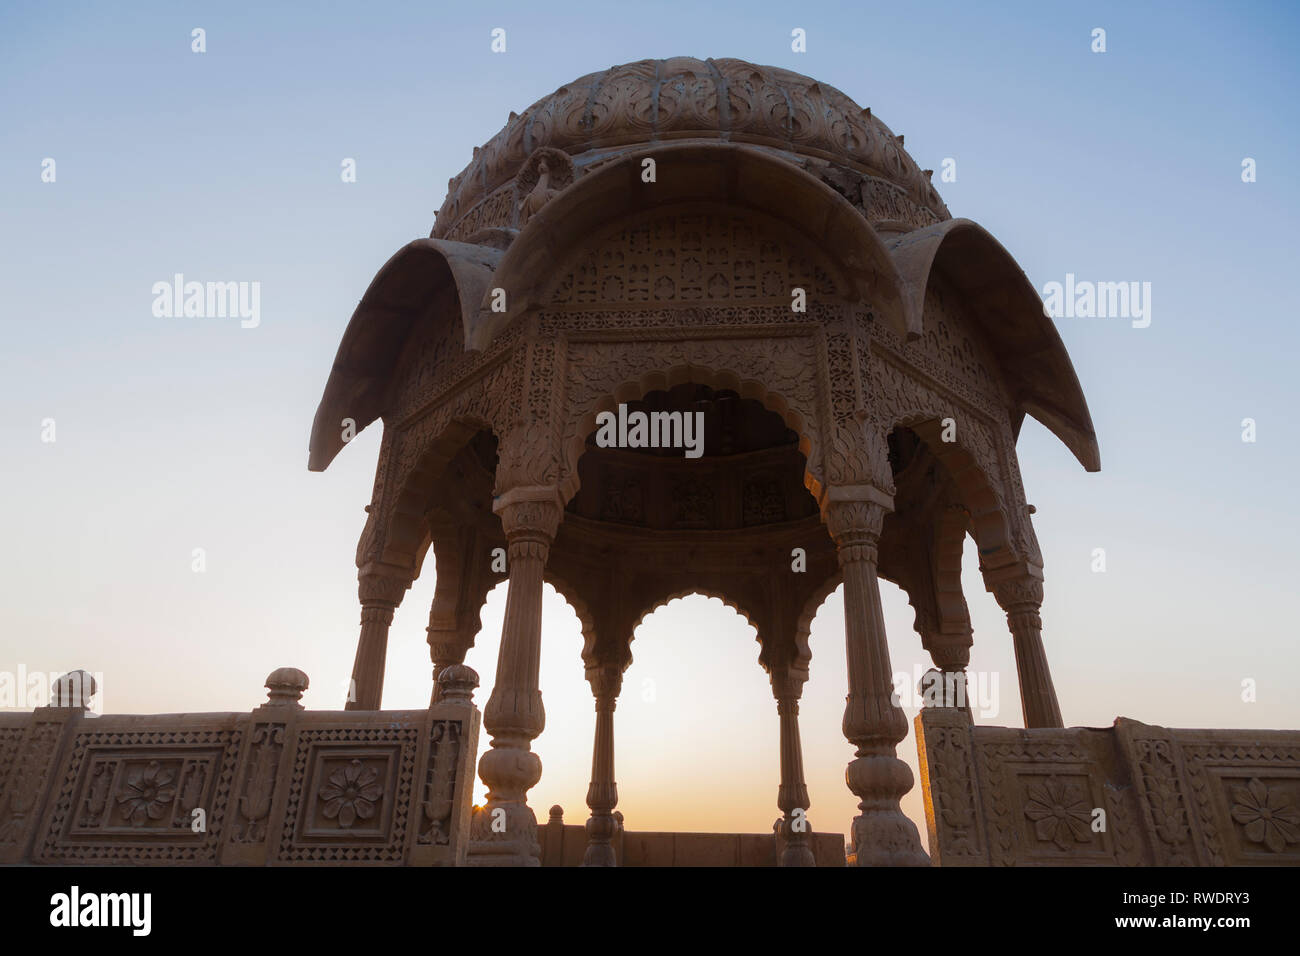 Gadisar Lake, Jaisalmer, Rajasthan, India, Asia Stock Photo